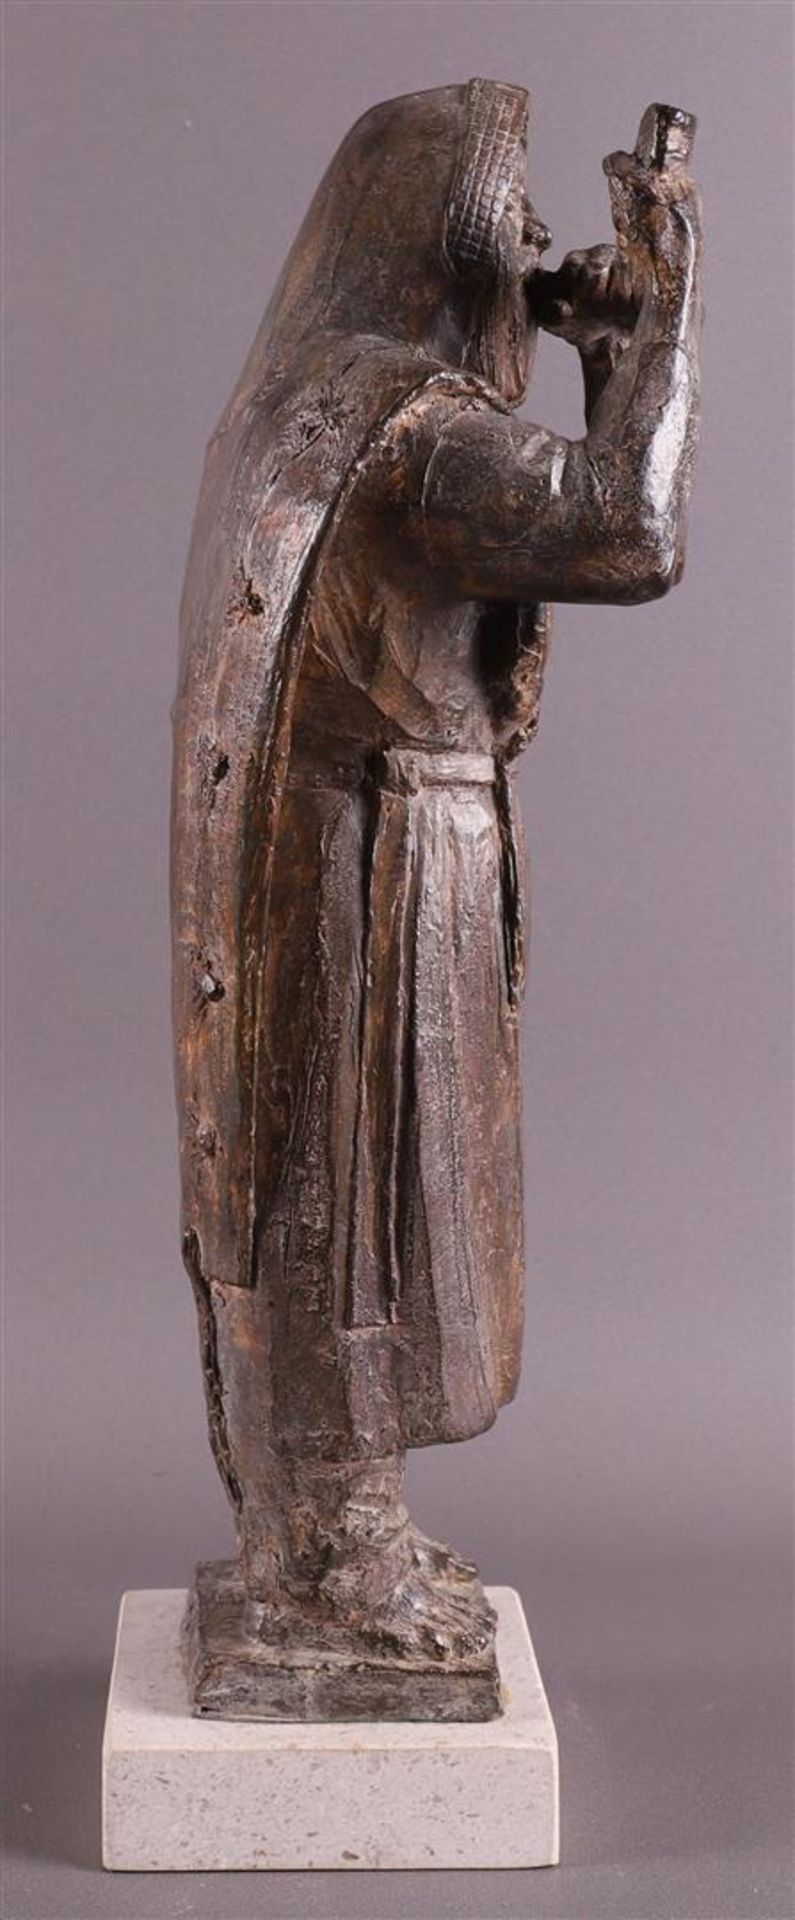 Djanashvili, Amiran (1962) 'Rosh Hashanah', bronze sculpture. - Image 5 of 6